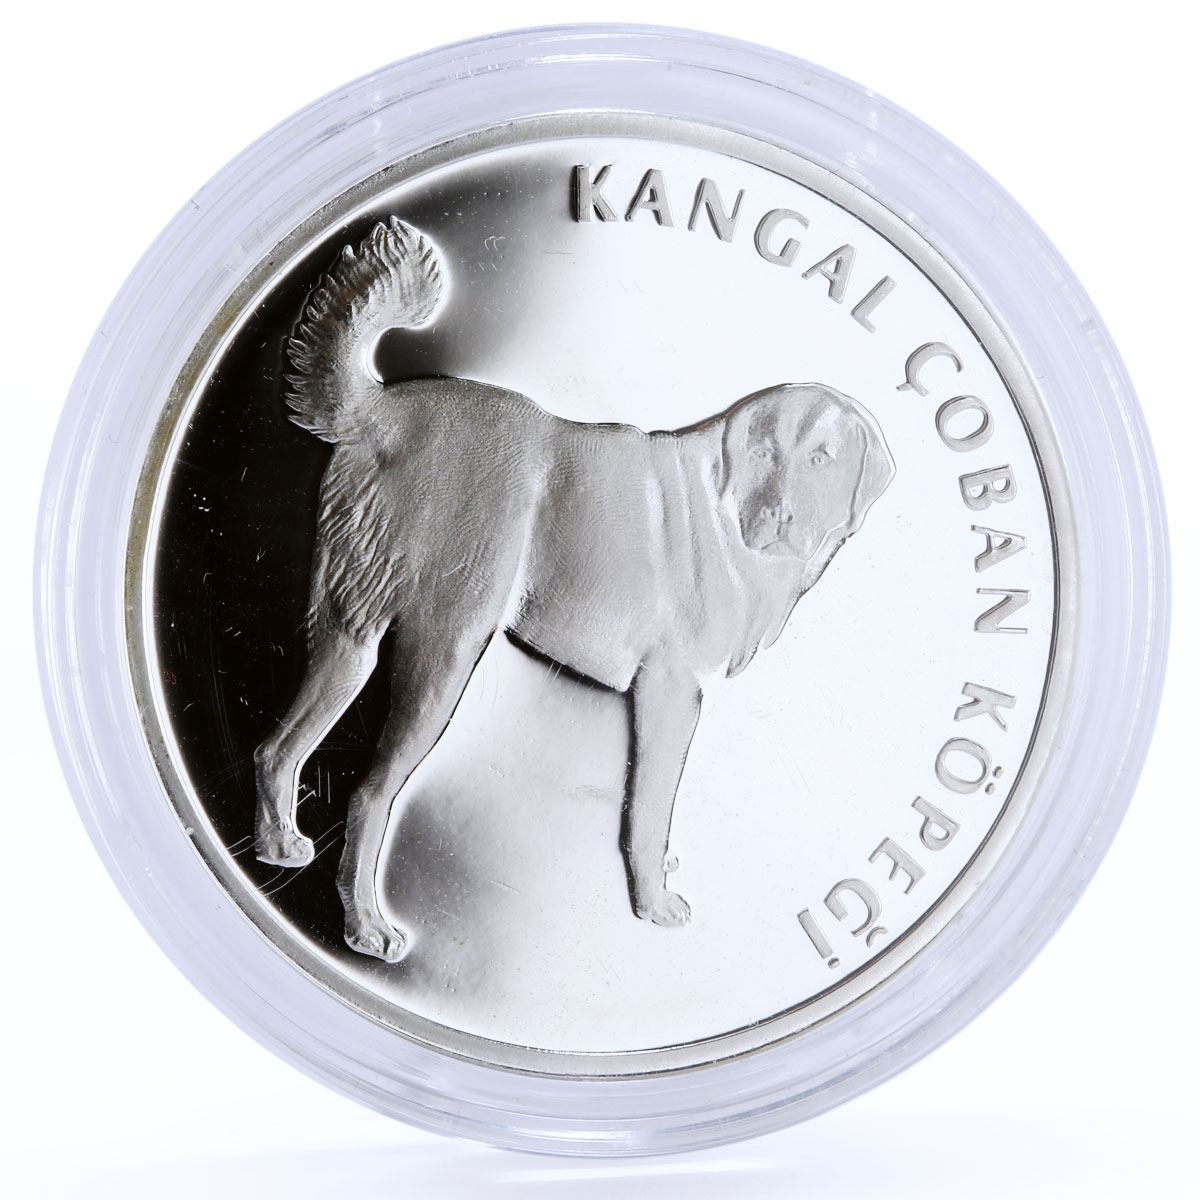 Turkey 20 lira Animal series Kangal Dog proof silver coin 2005